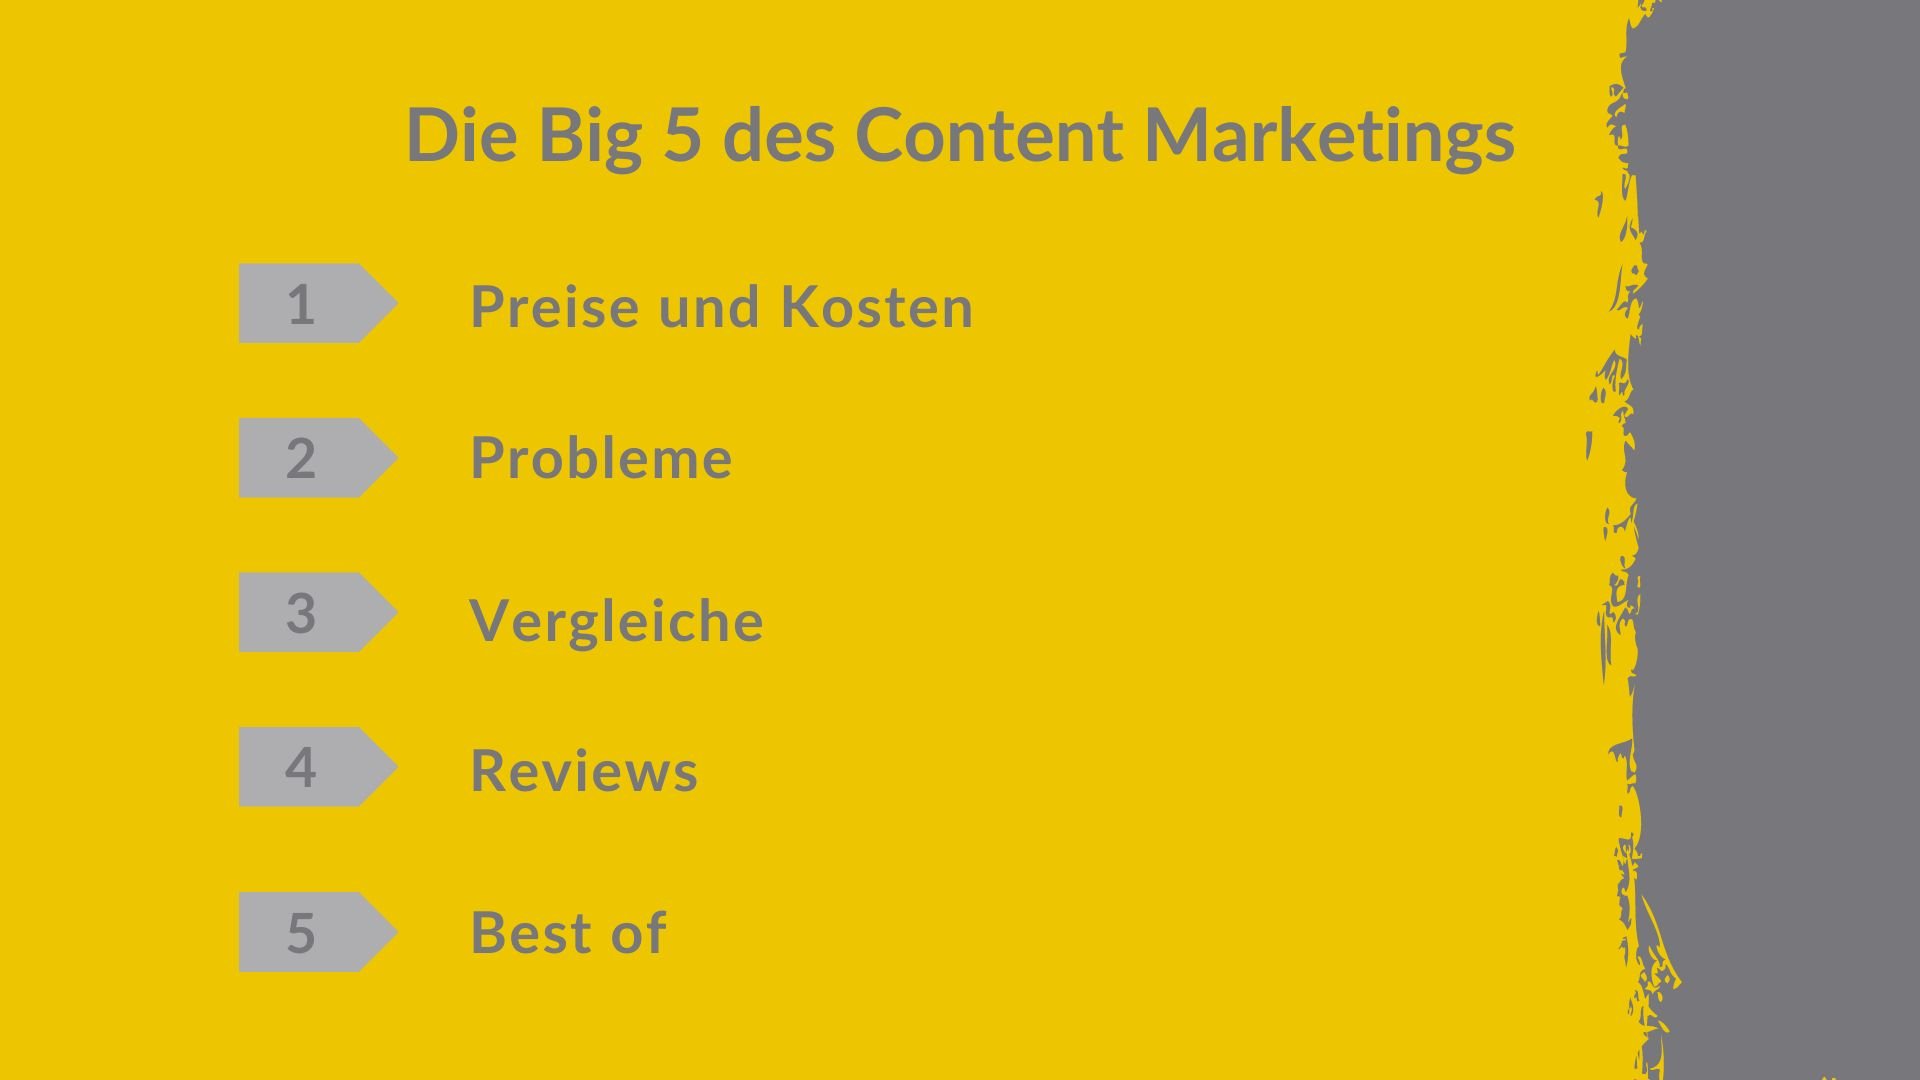 Die Big 5 des Content Marketings